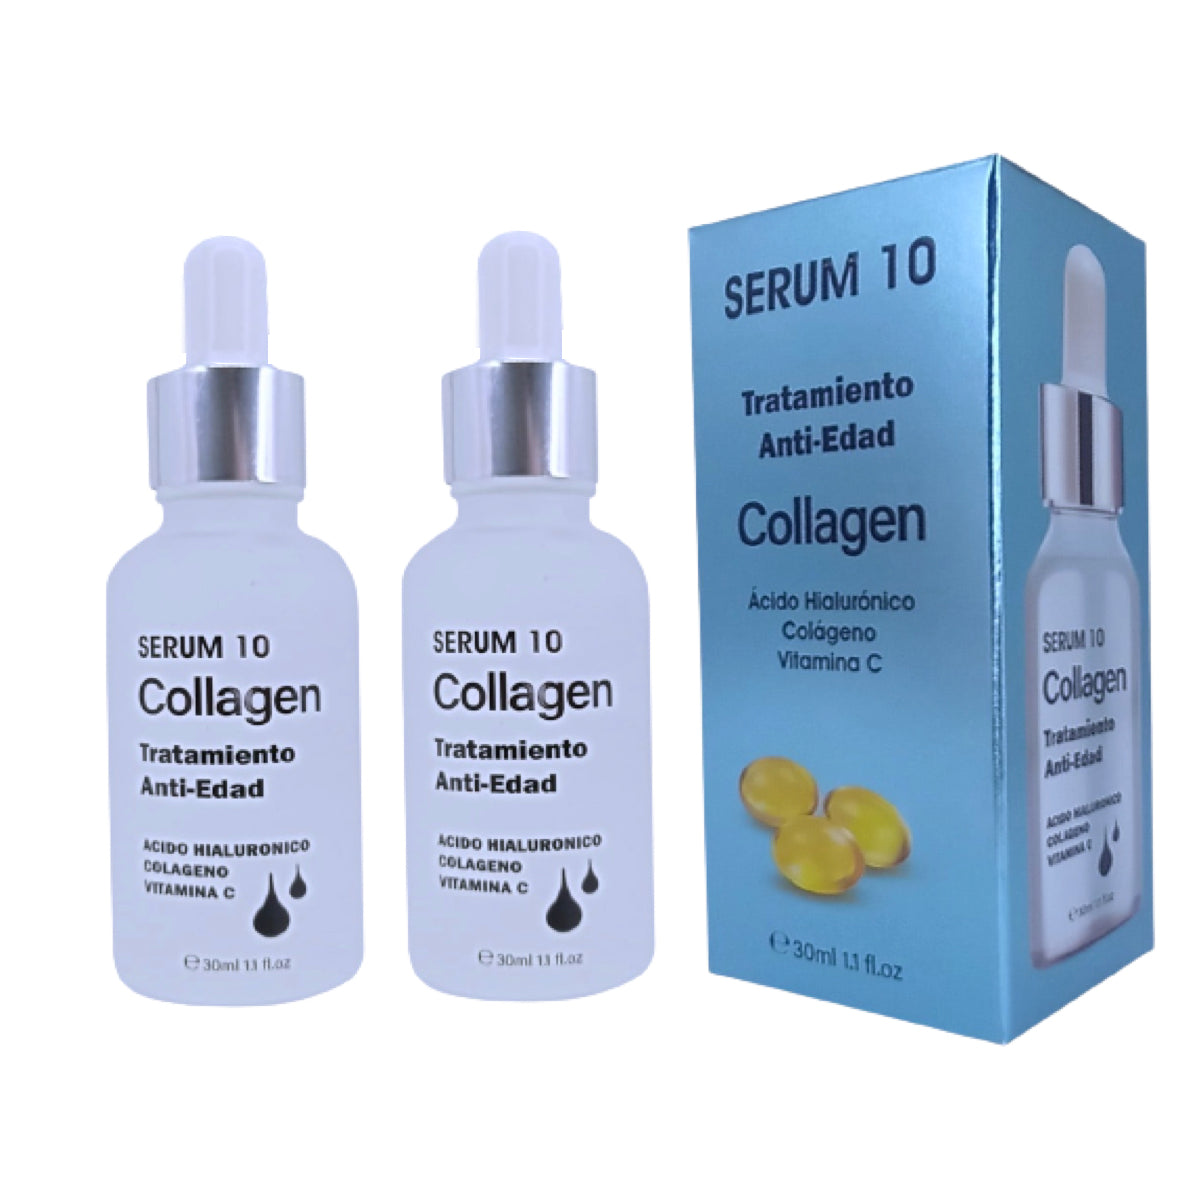 Colágeno Serum 10